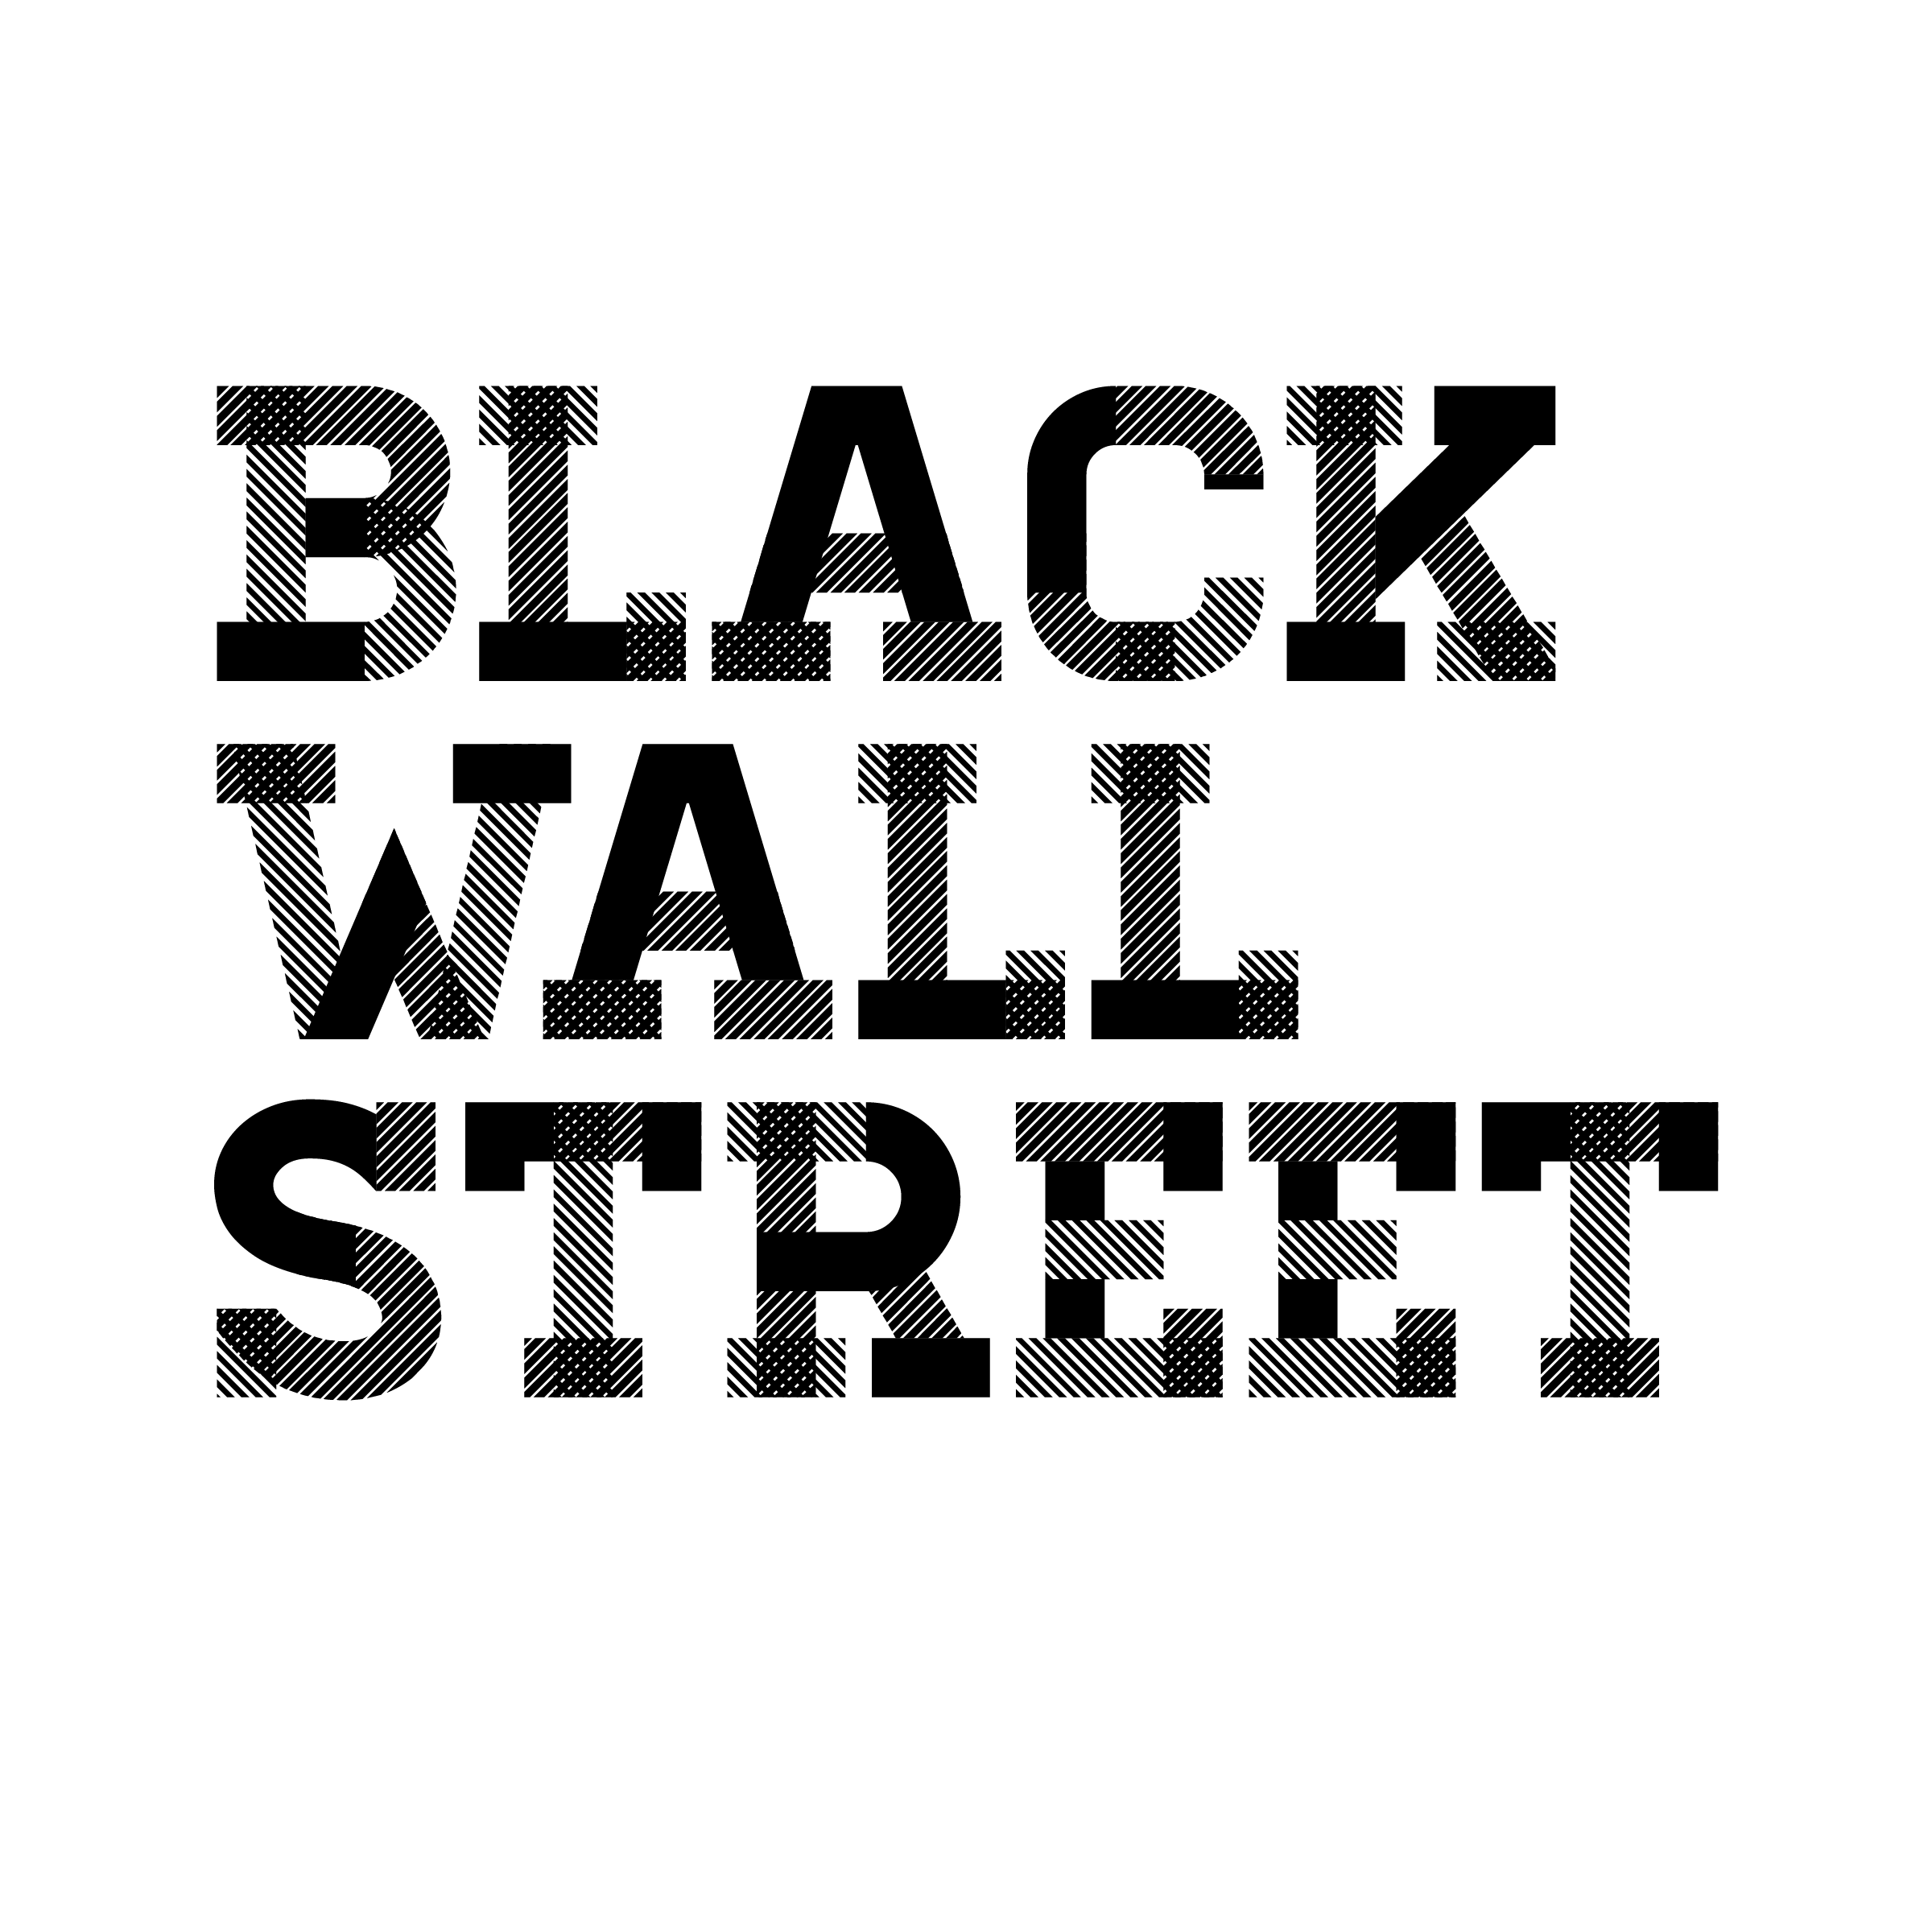 Wall Street Logo - Black Wall Street Home 2018 - Black Wall Street